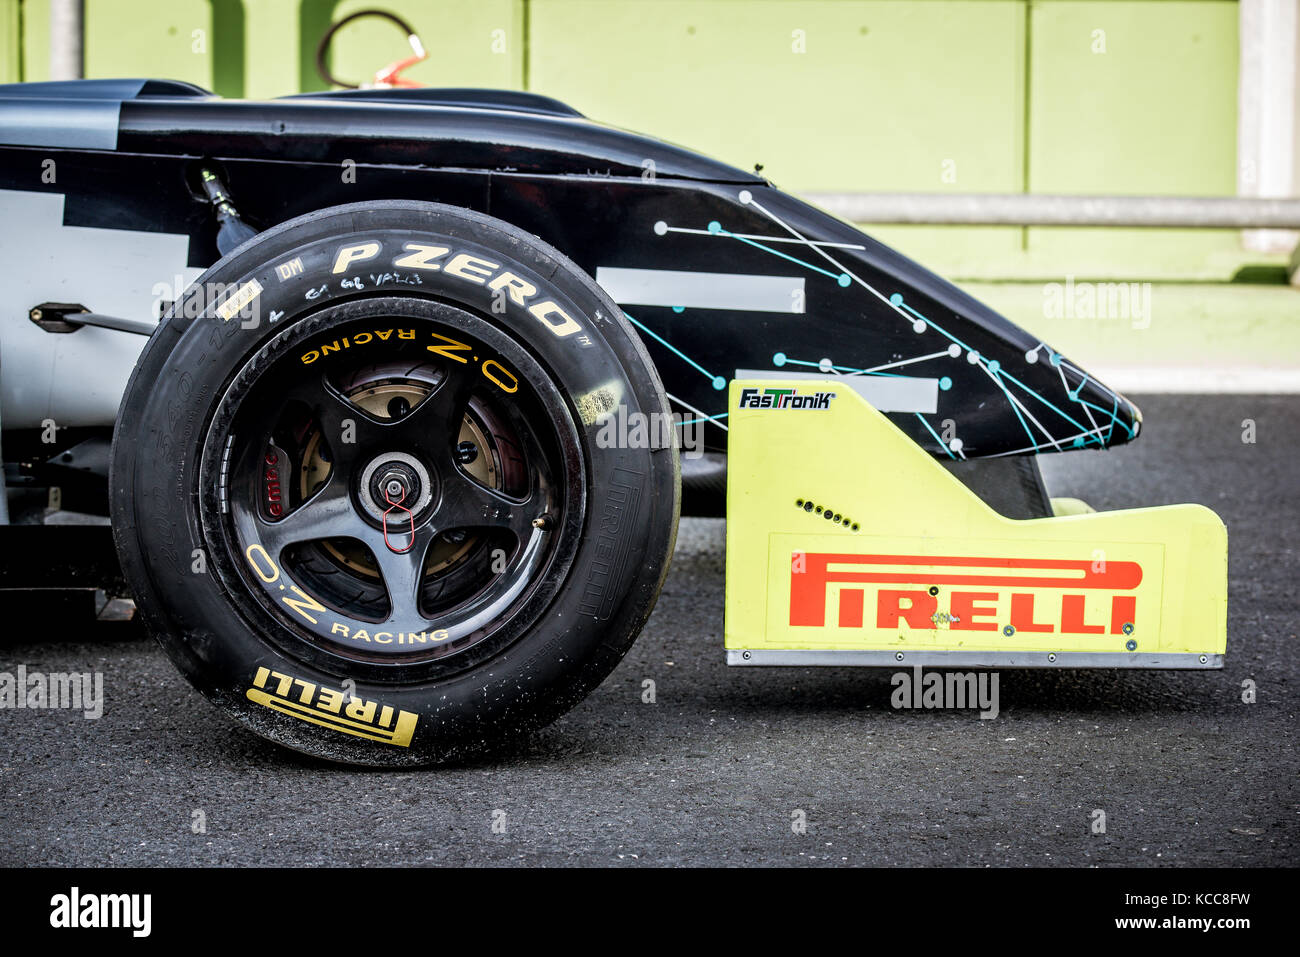 Vallelunga, Italy september 24 2017. Single seater formula car nose spoiler and wheel detail car stop in pit lane Stock Photo